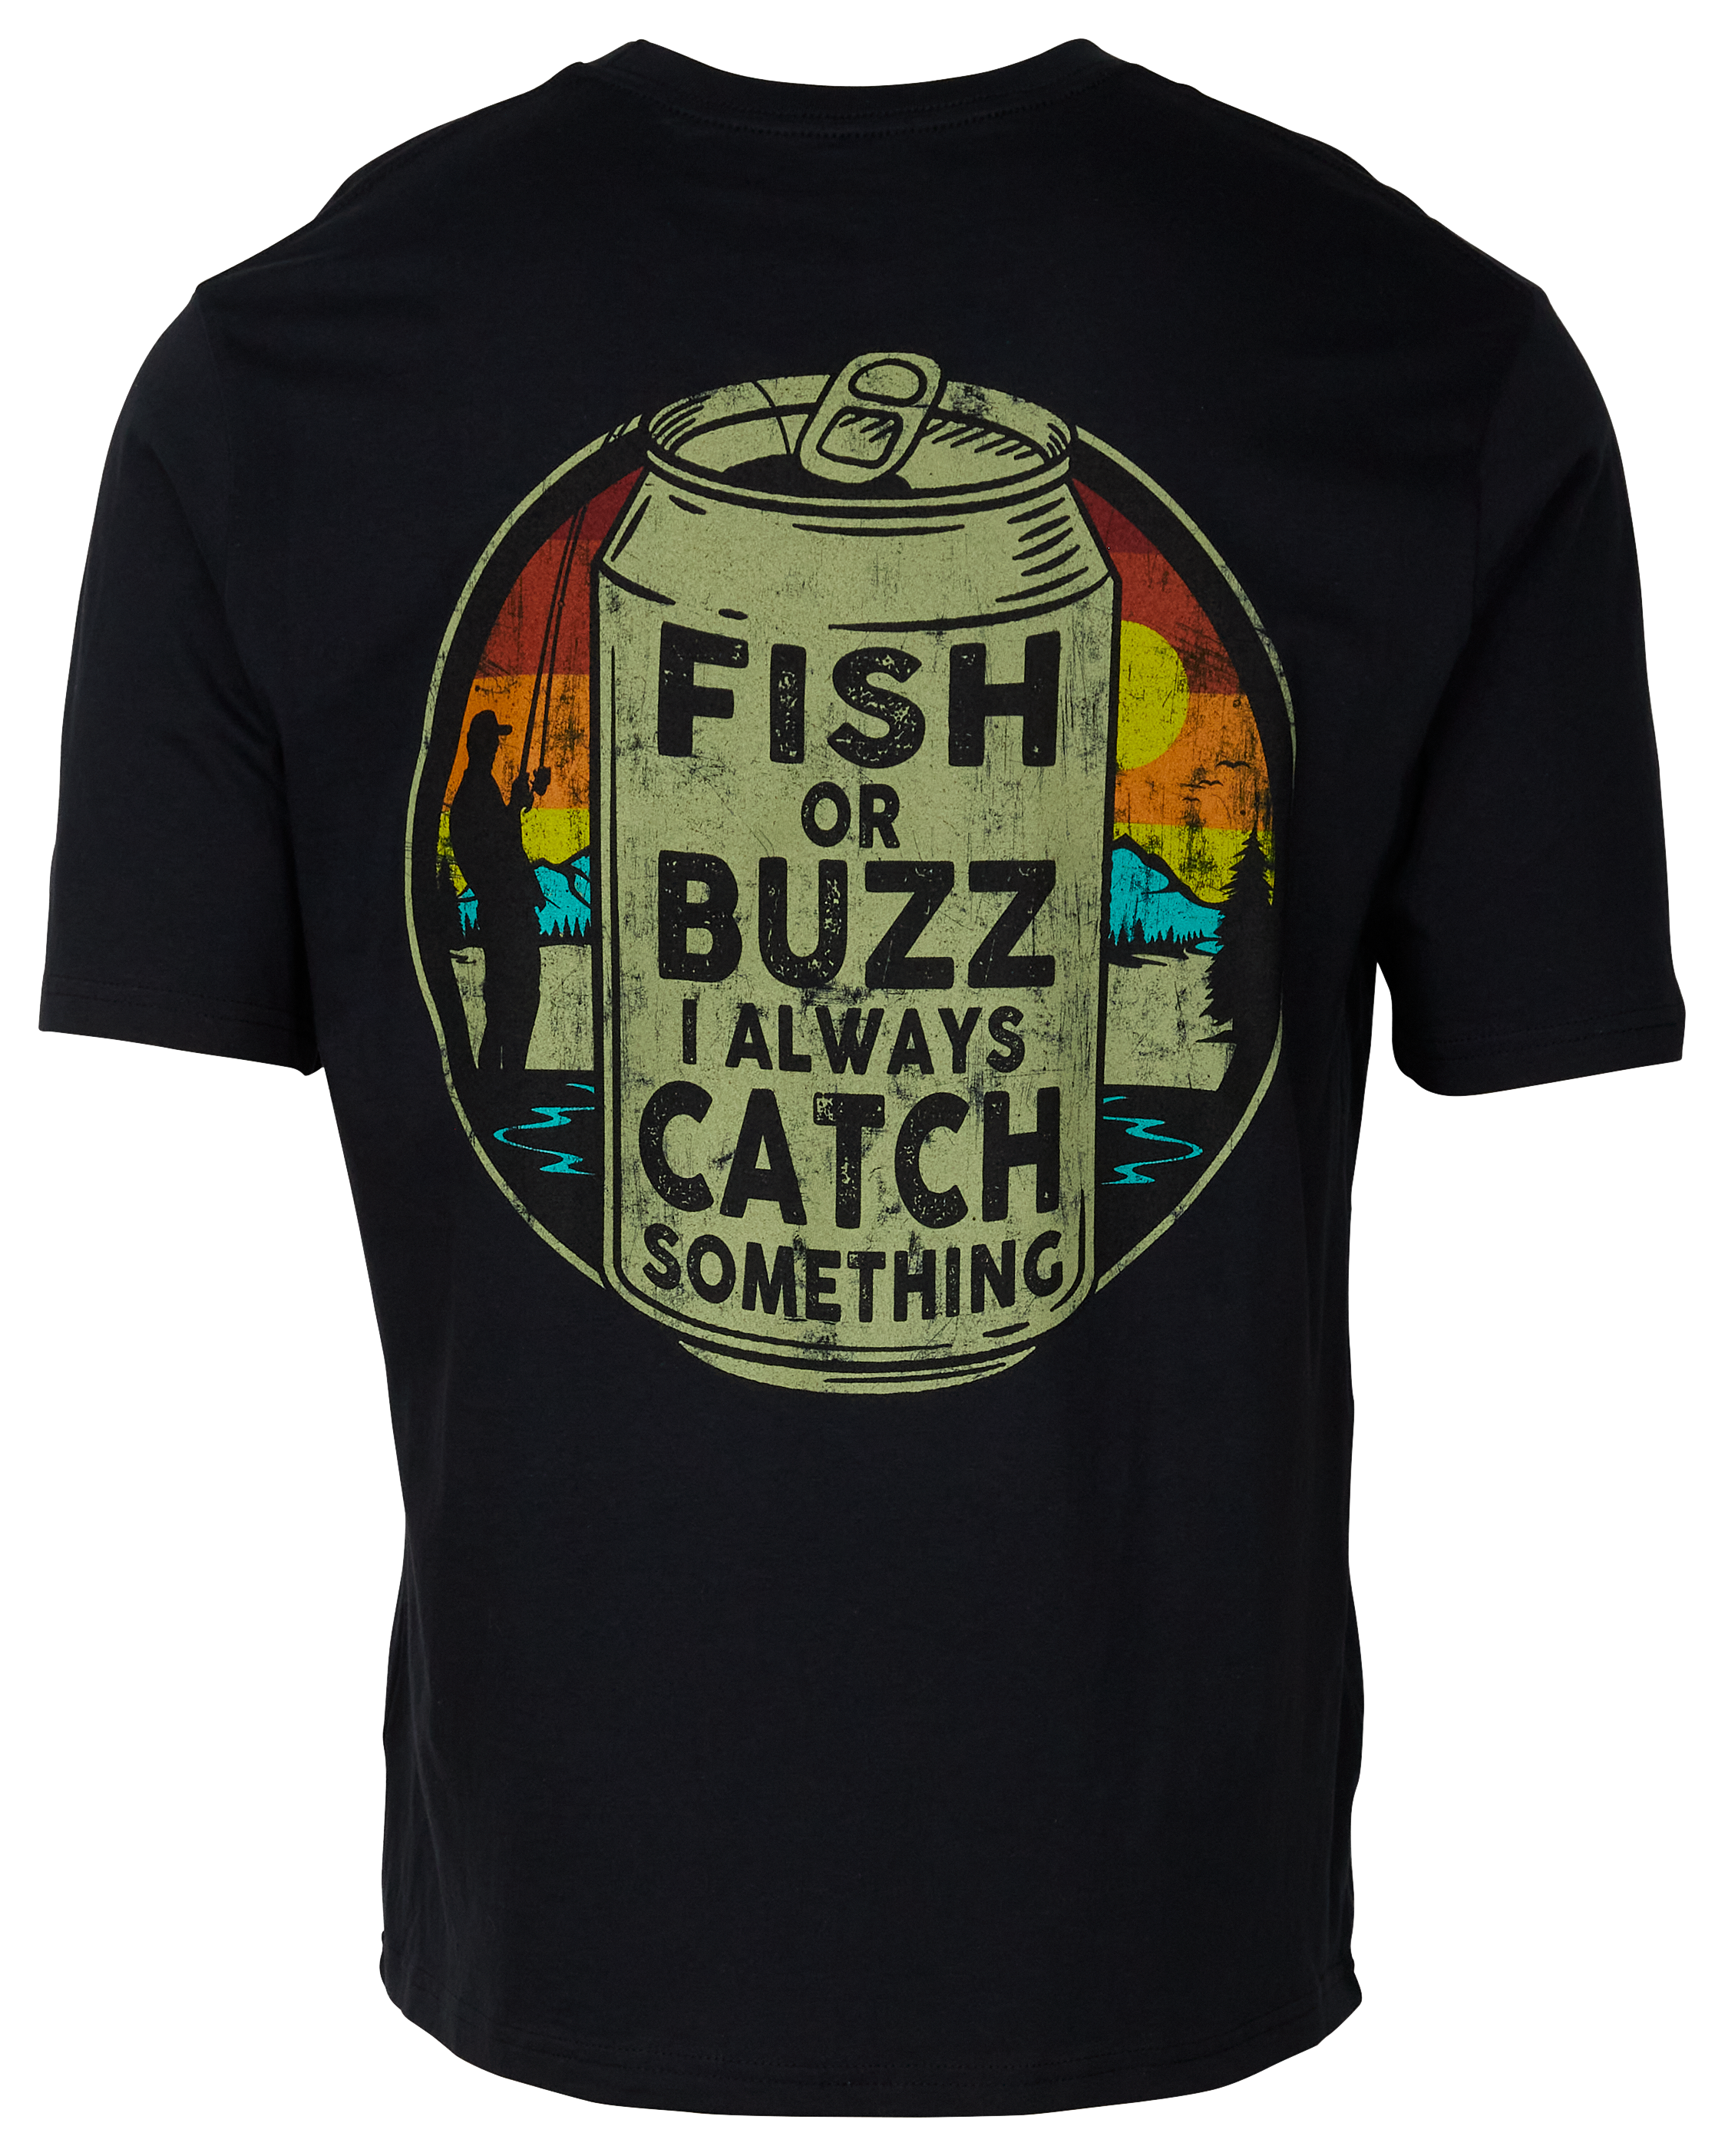 Bill Dance Outdoors Bass Fishing Tennessee Hat T-Shirt L USA L/S